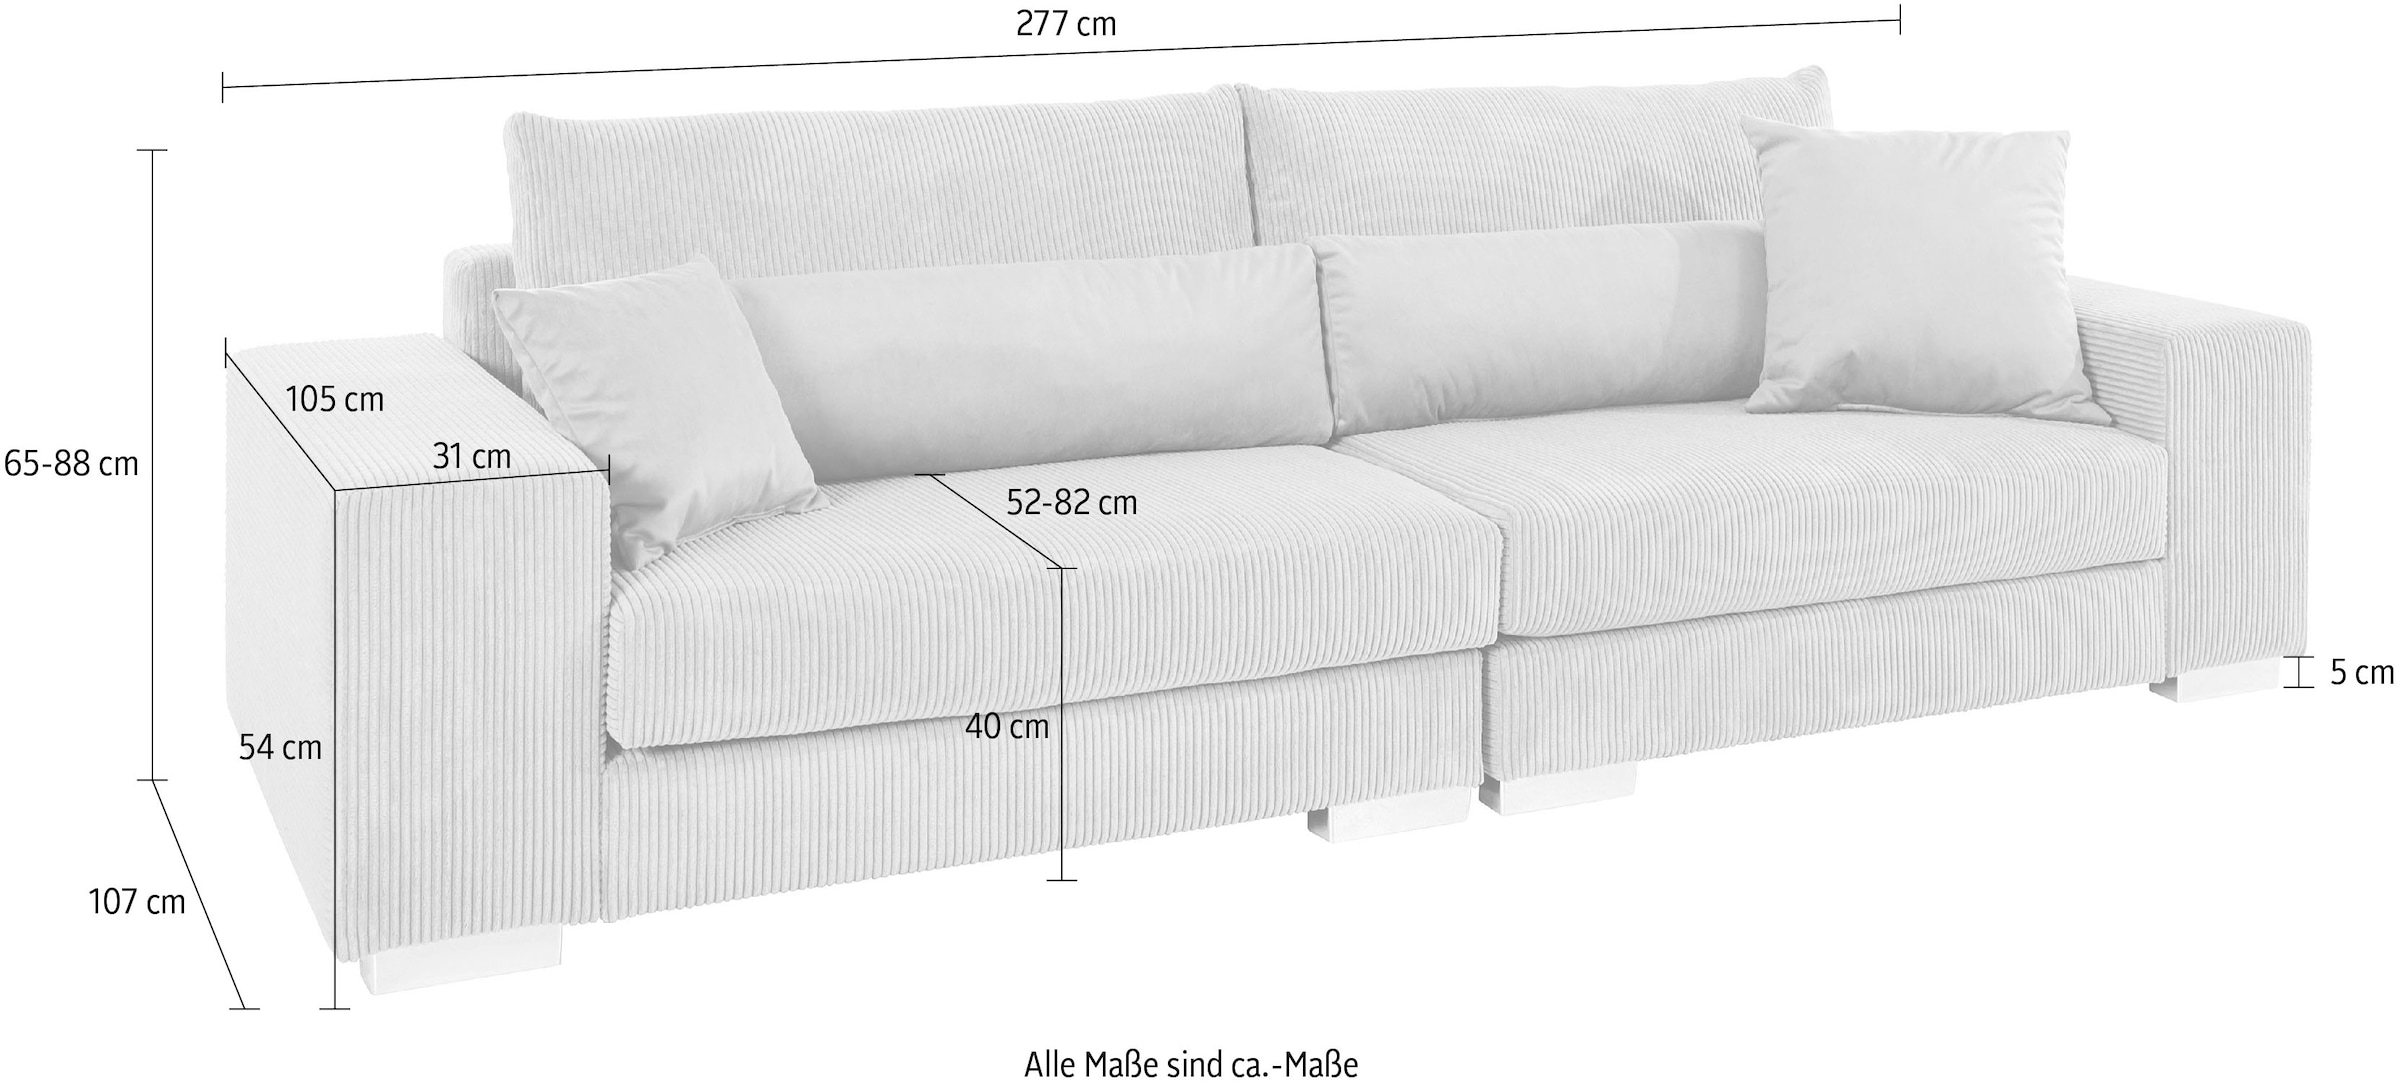 Home affaire Big-Sofa OTTO in 6-teiliges inkl. Cord bestellen cm, Breite 277 »Vasco«, Kissenset, bei